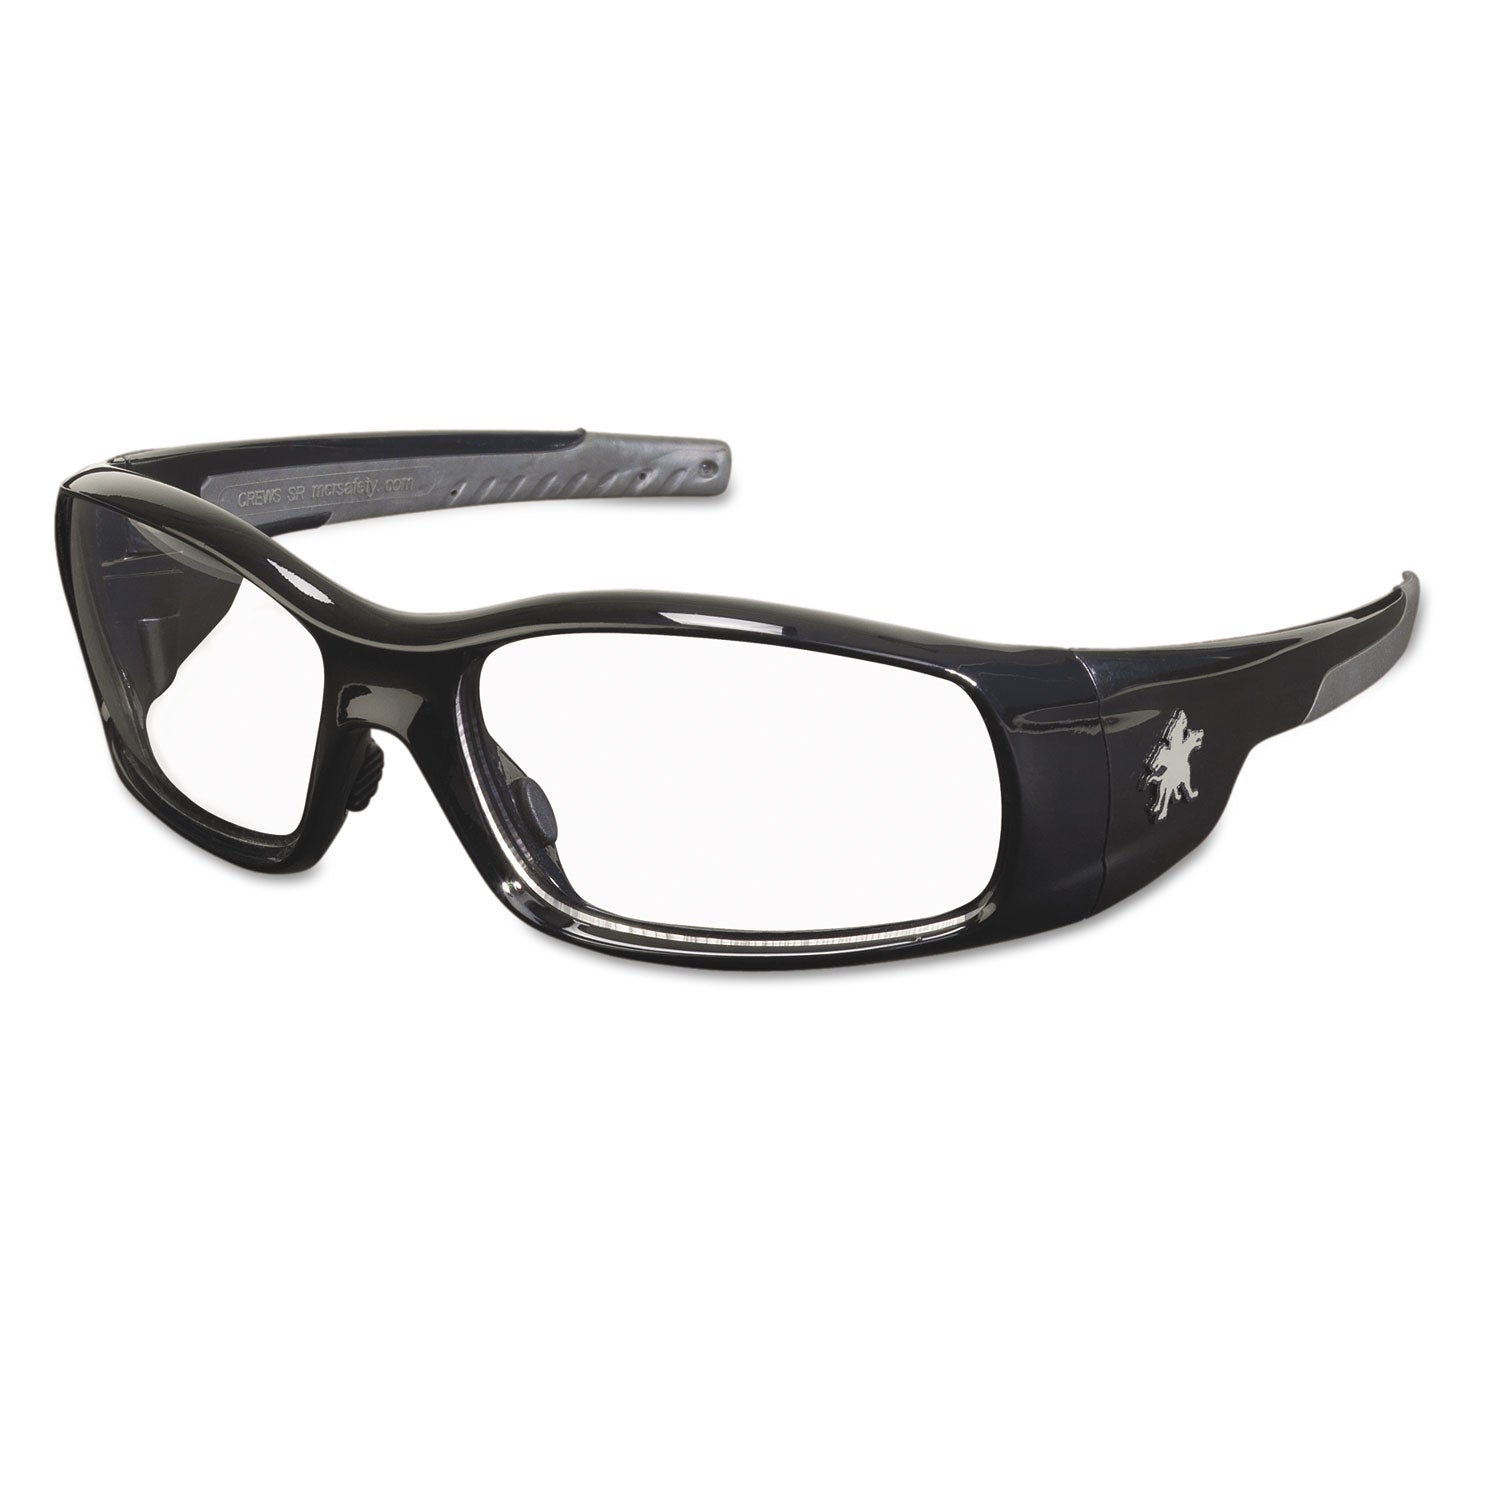 Swagger Safety Glasses, Black Frame, Clear Lens - 